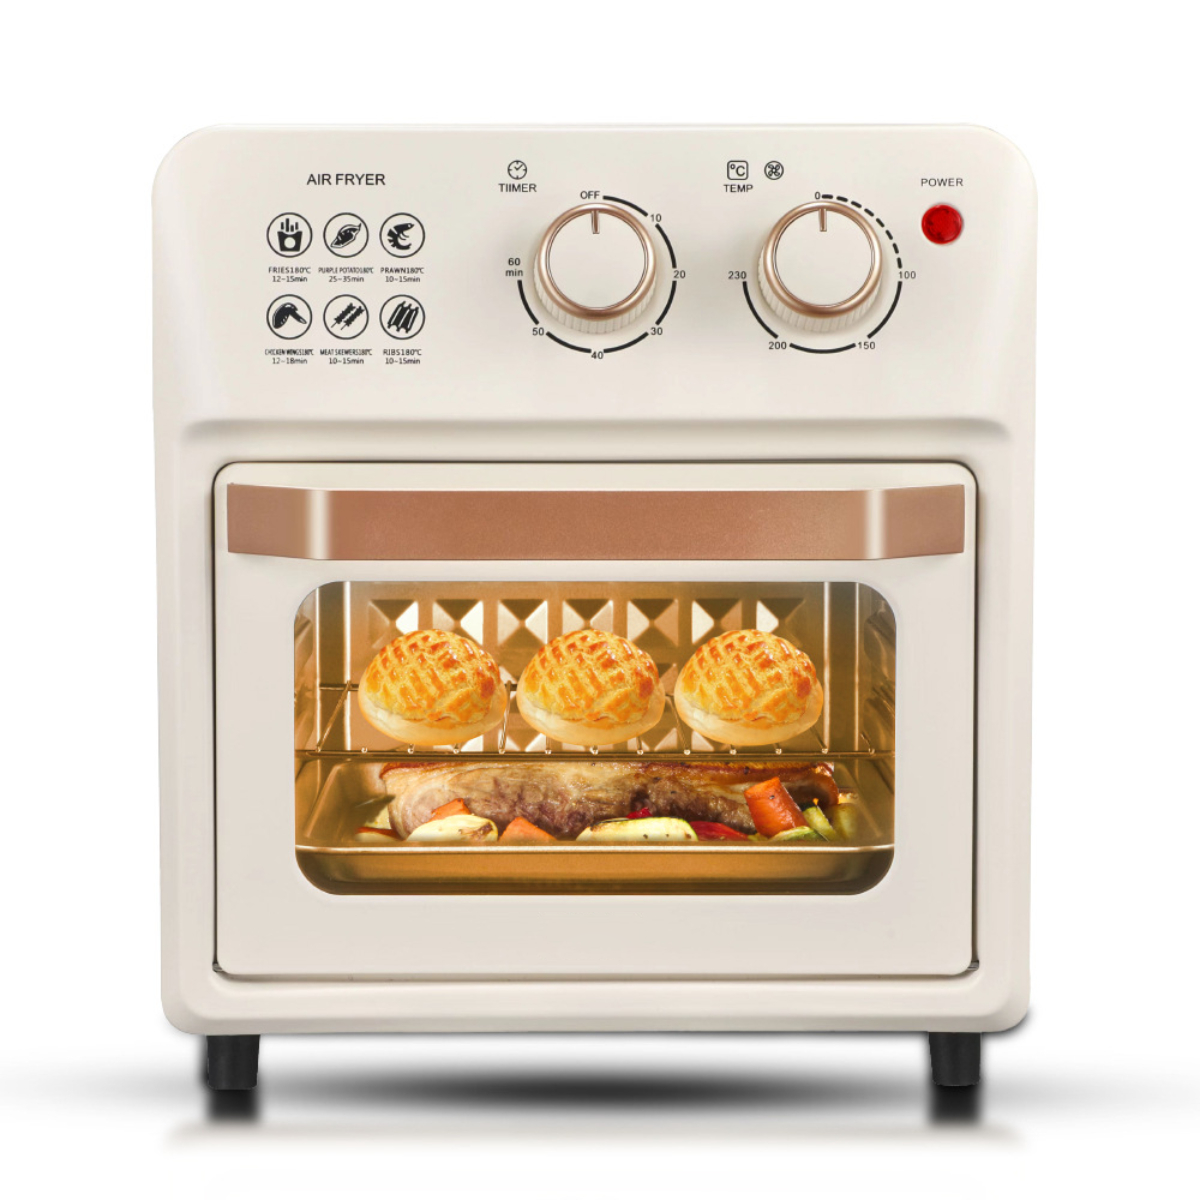 Heißluftfritteuse Fryer Automatisch Smart Oven BYTELIKE Multifunktional Watt 1250 Home Air Fryer Elektro-Backofen 14L weiß